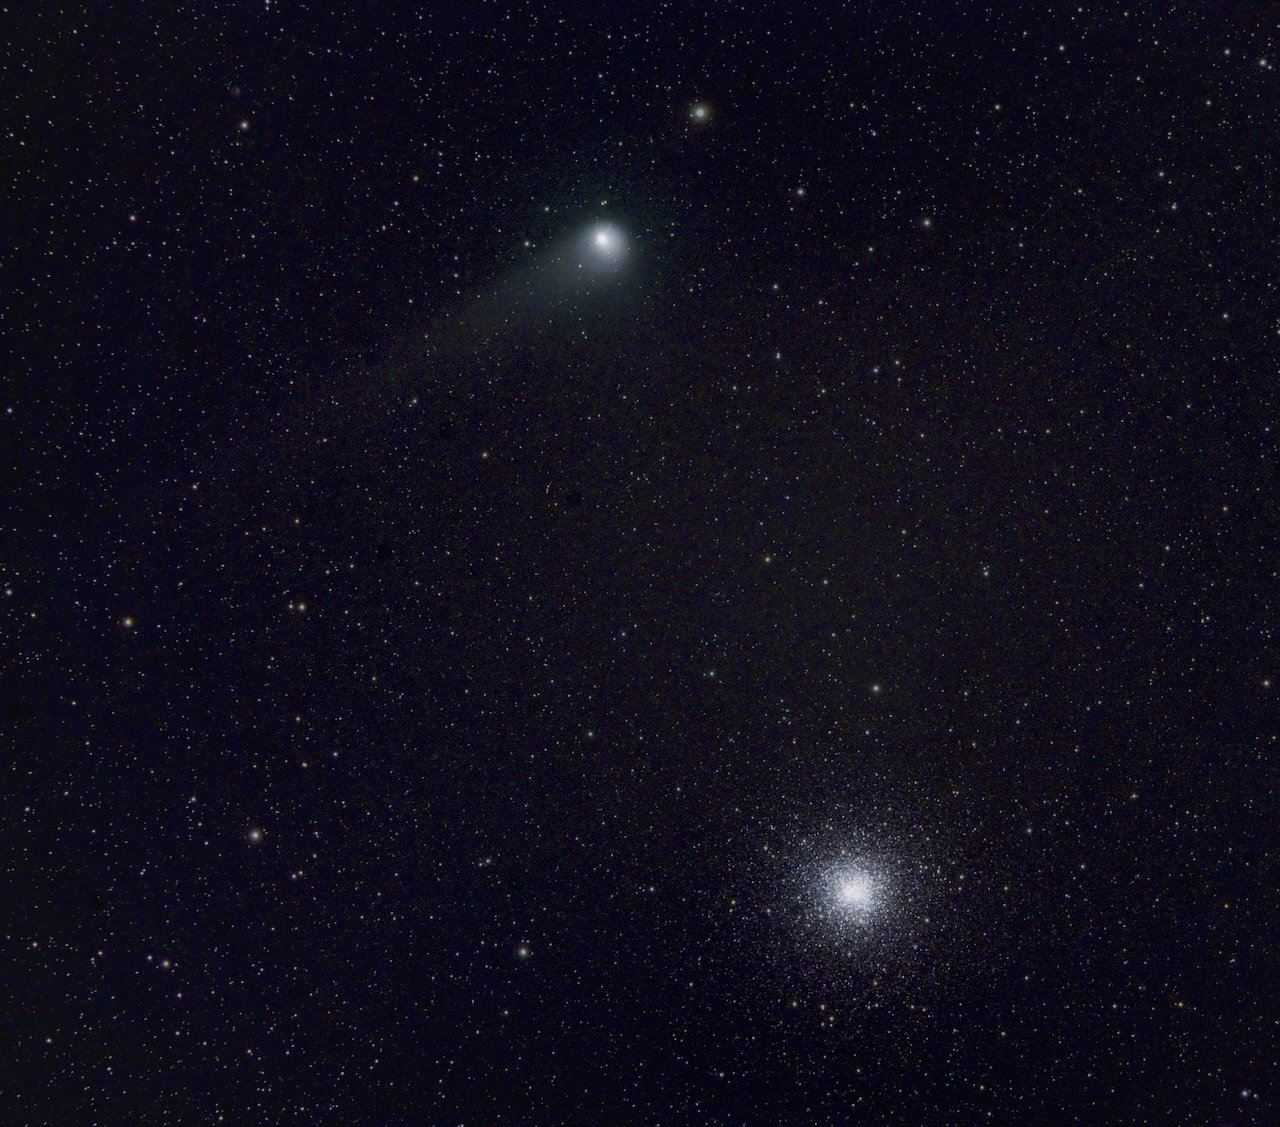 Comet C/2017 K2 (PANSTARRS) with the globular cluster M10